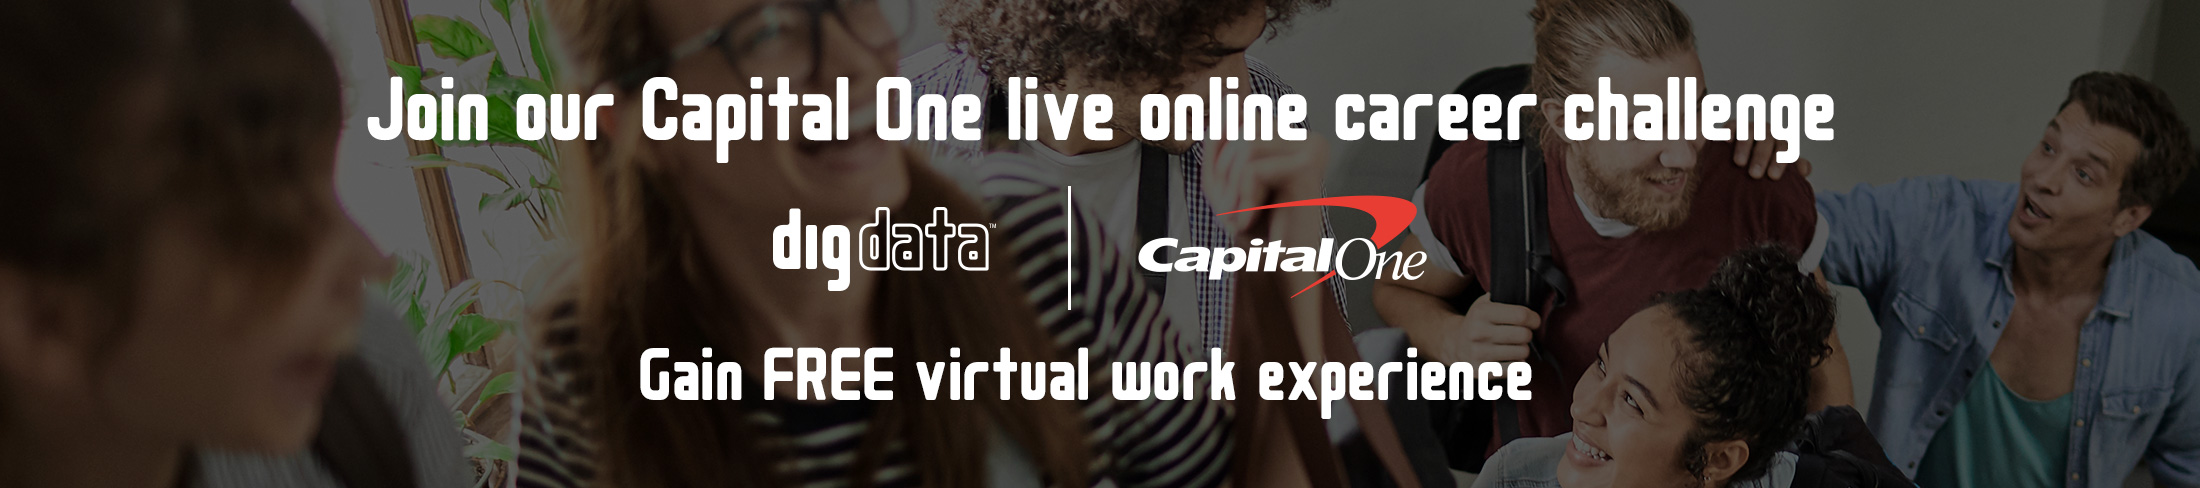 Digdata Website Capital One Event Banner